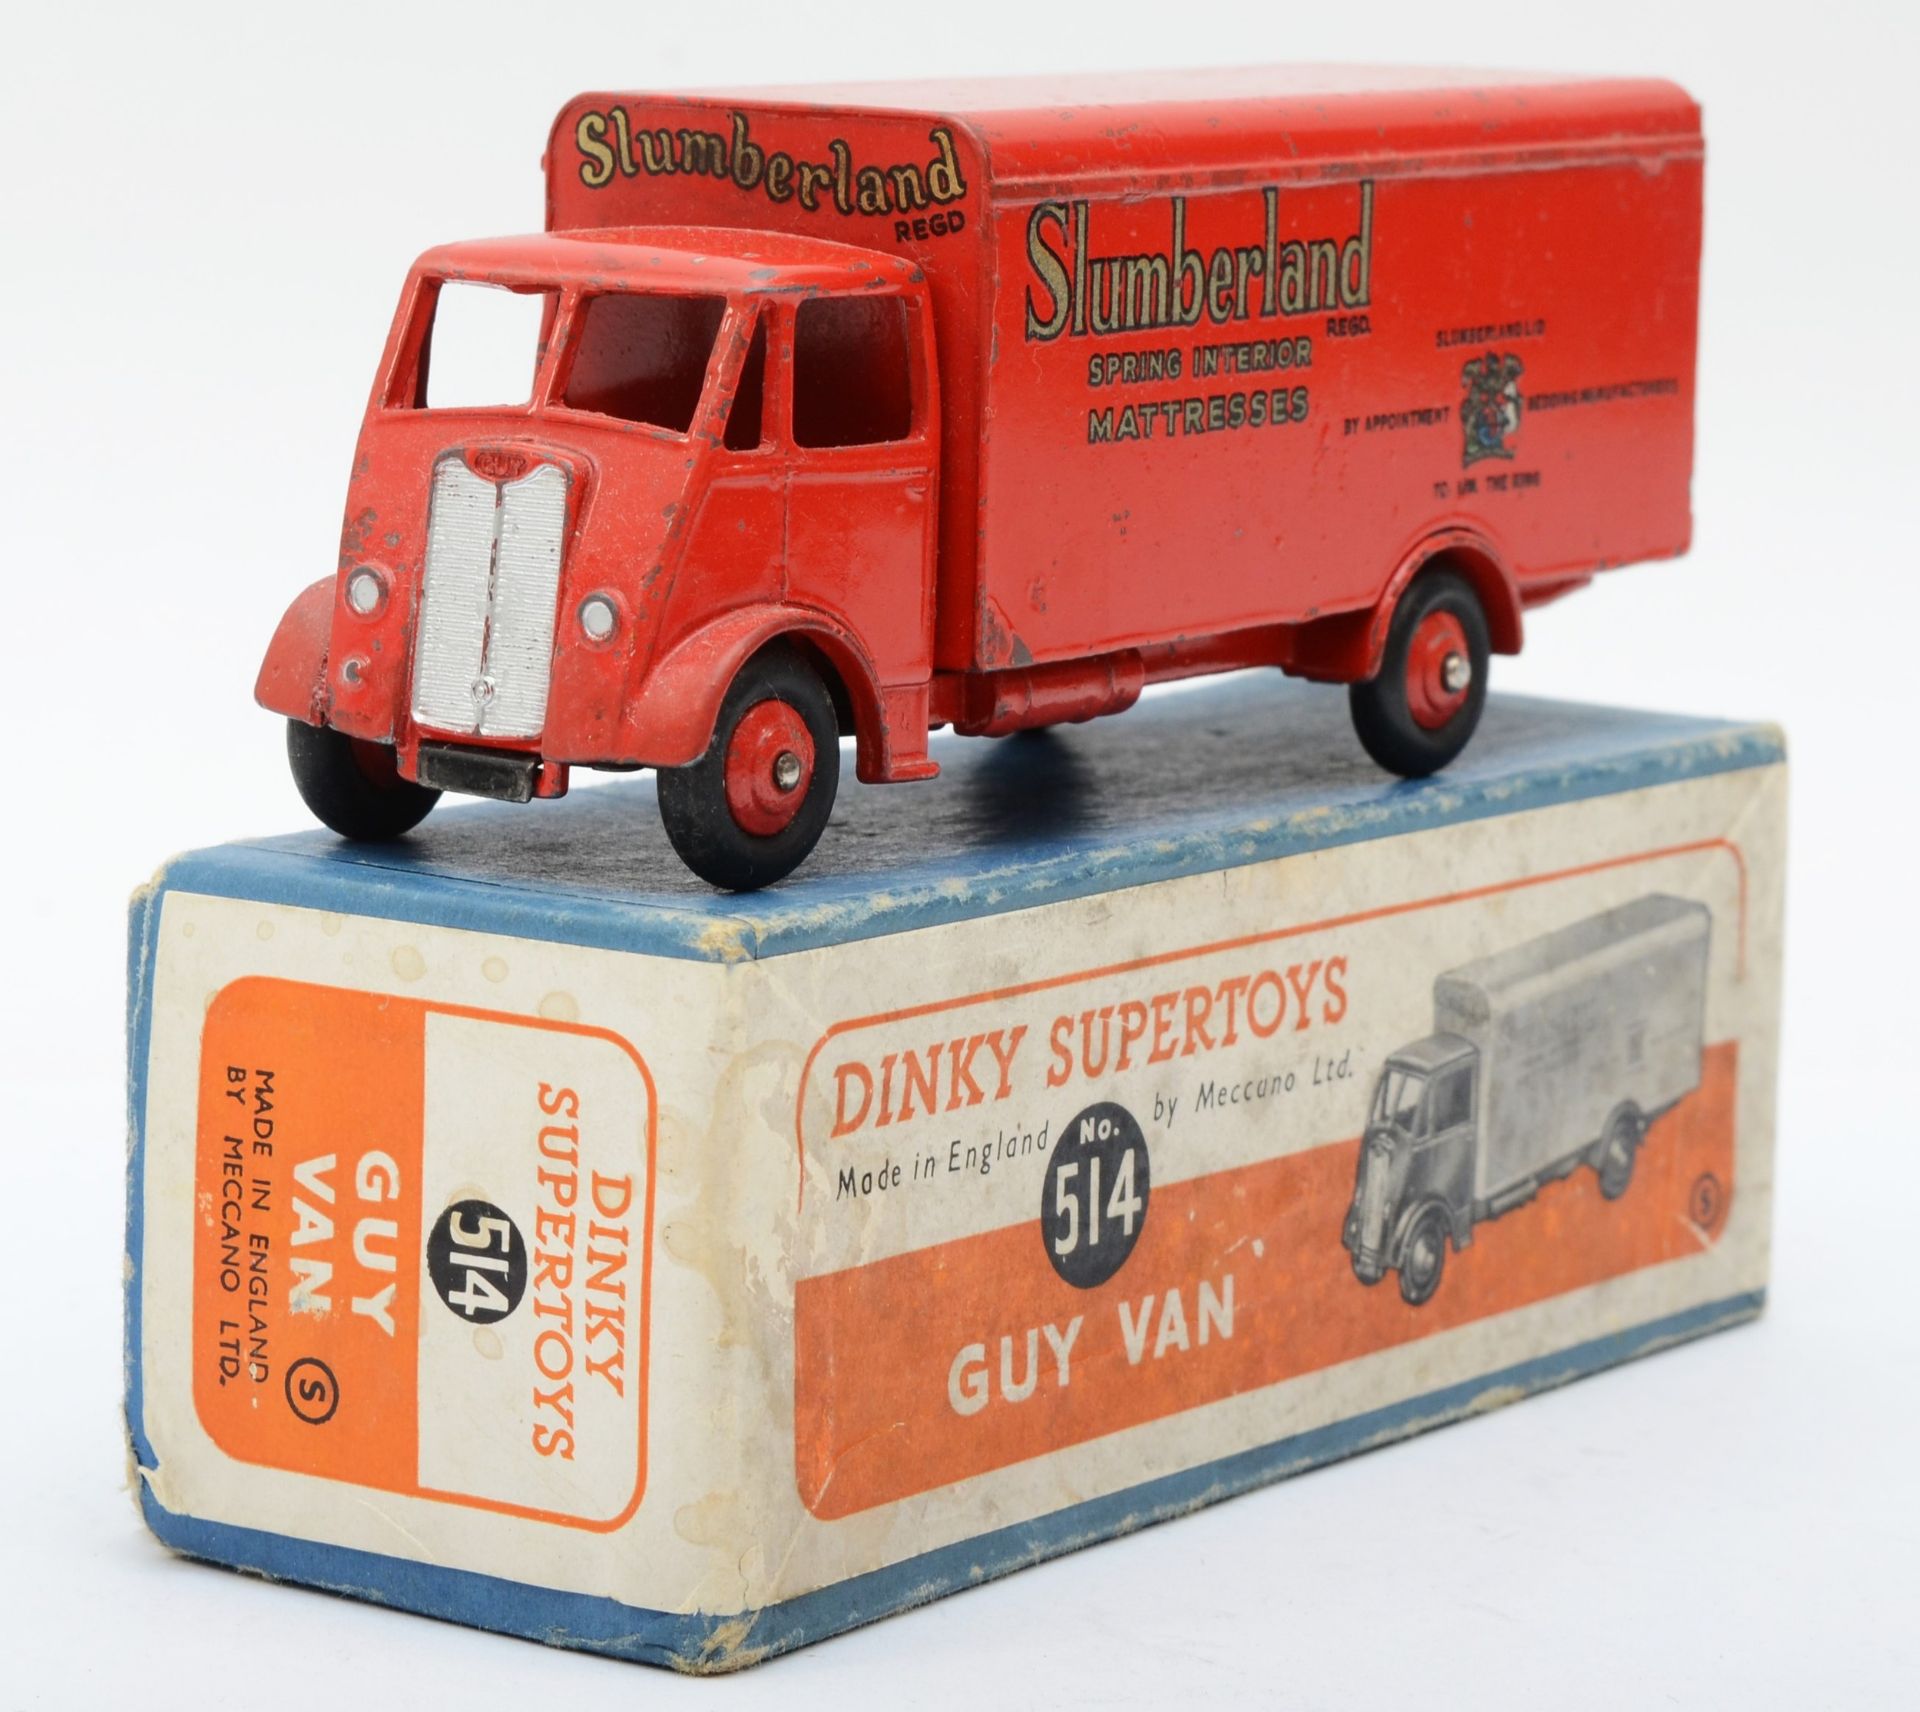 Dinky Toys - A boxed Dinky Supertoy Guy Van "Slumberland" No 514.